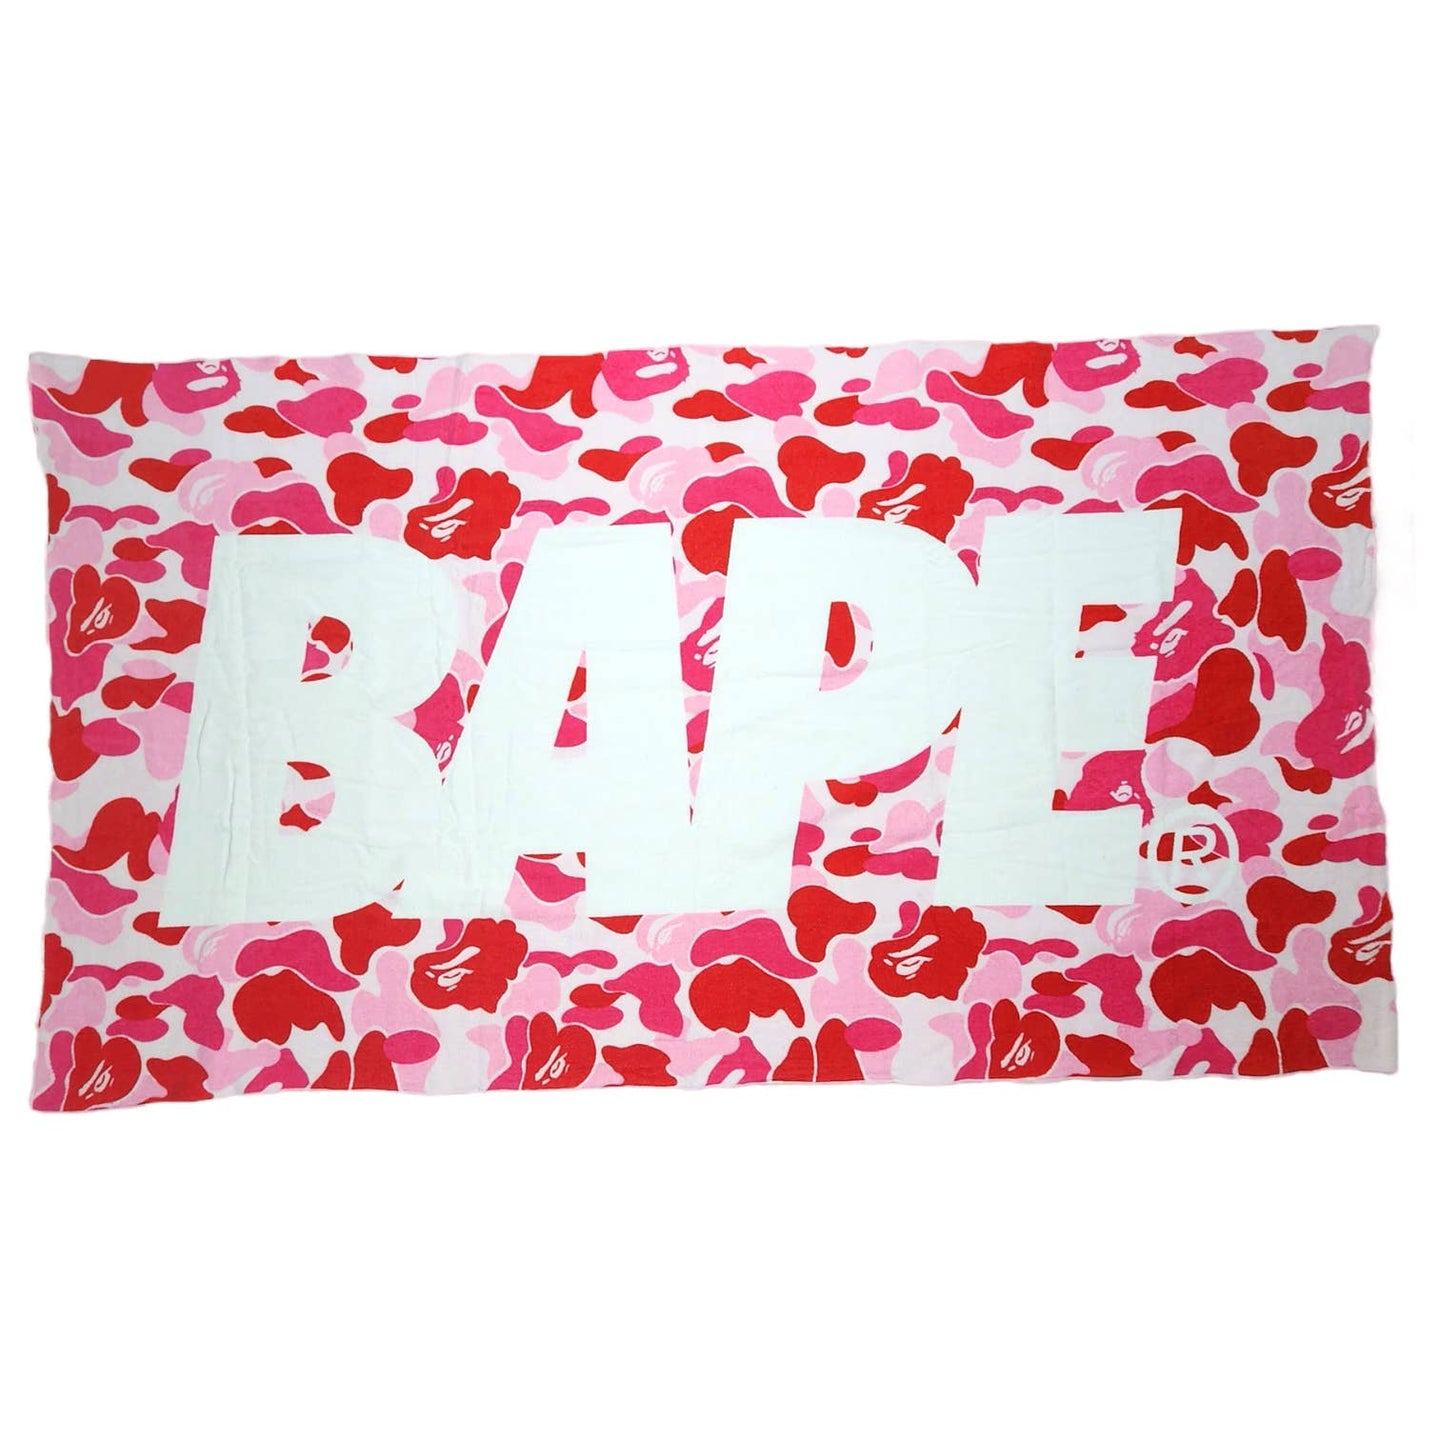 Bape Towel ABC Pink White Brand New